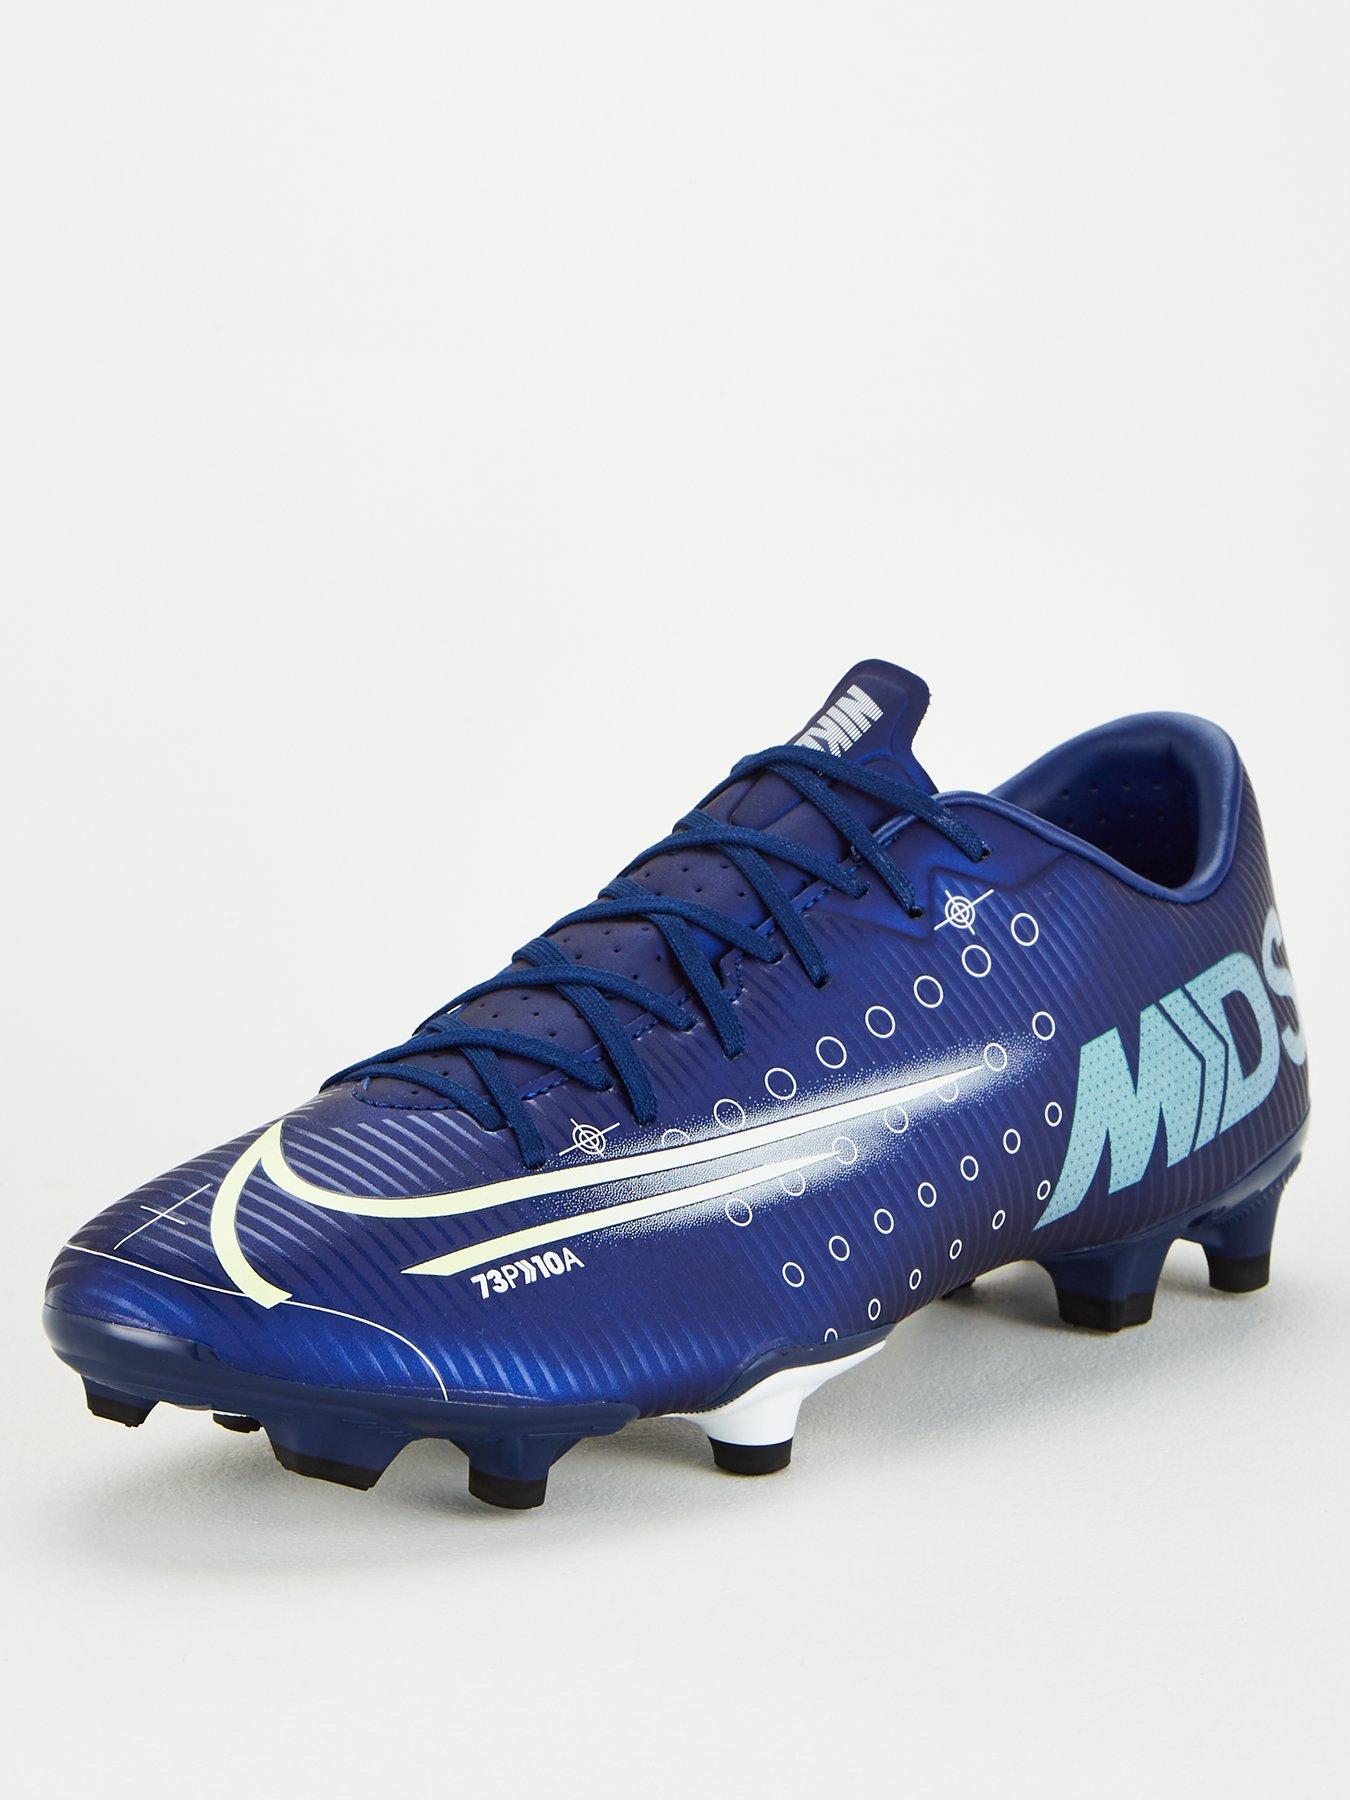 Nike Mercurial Vapor XI SG Pro Mens Soccer Cleats eBay